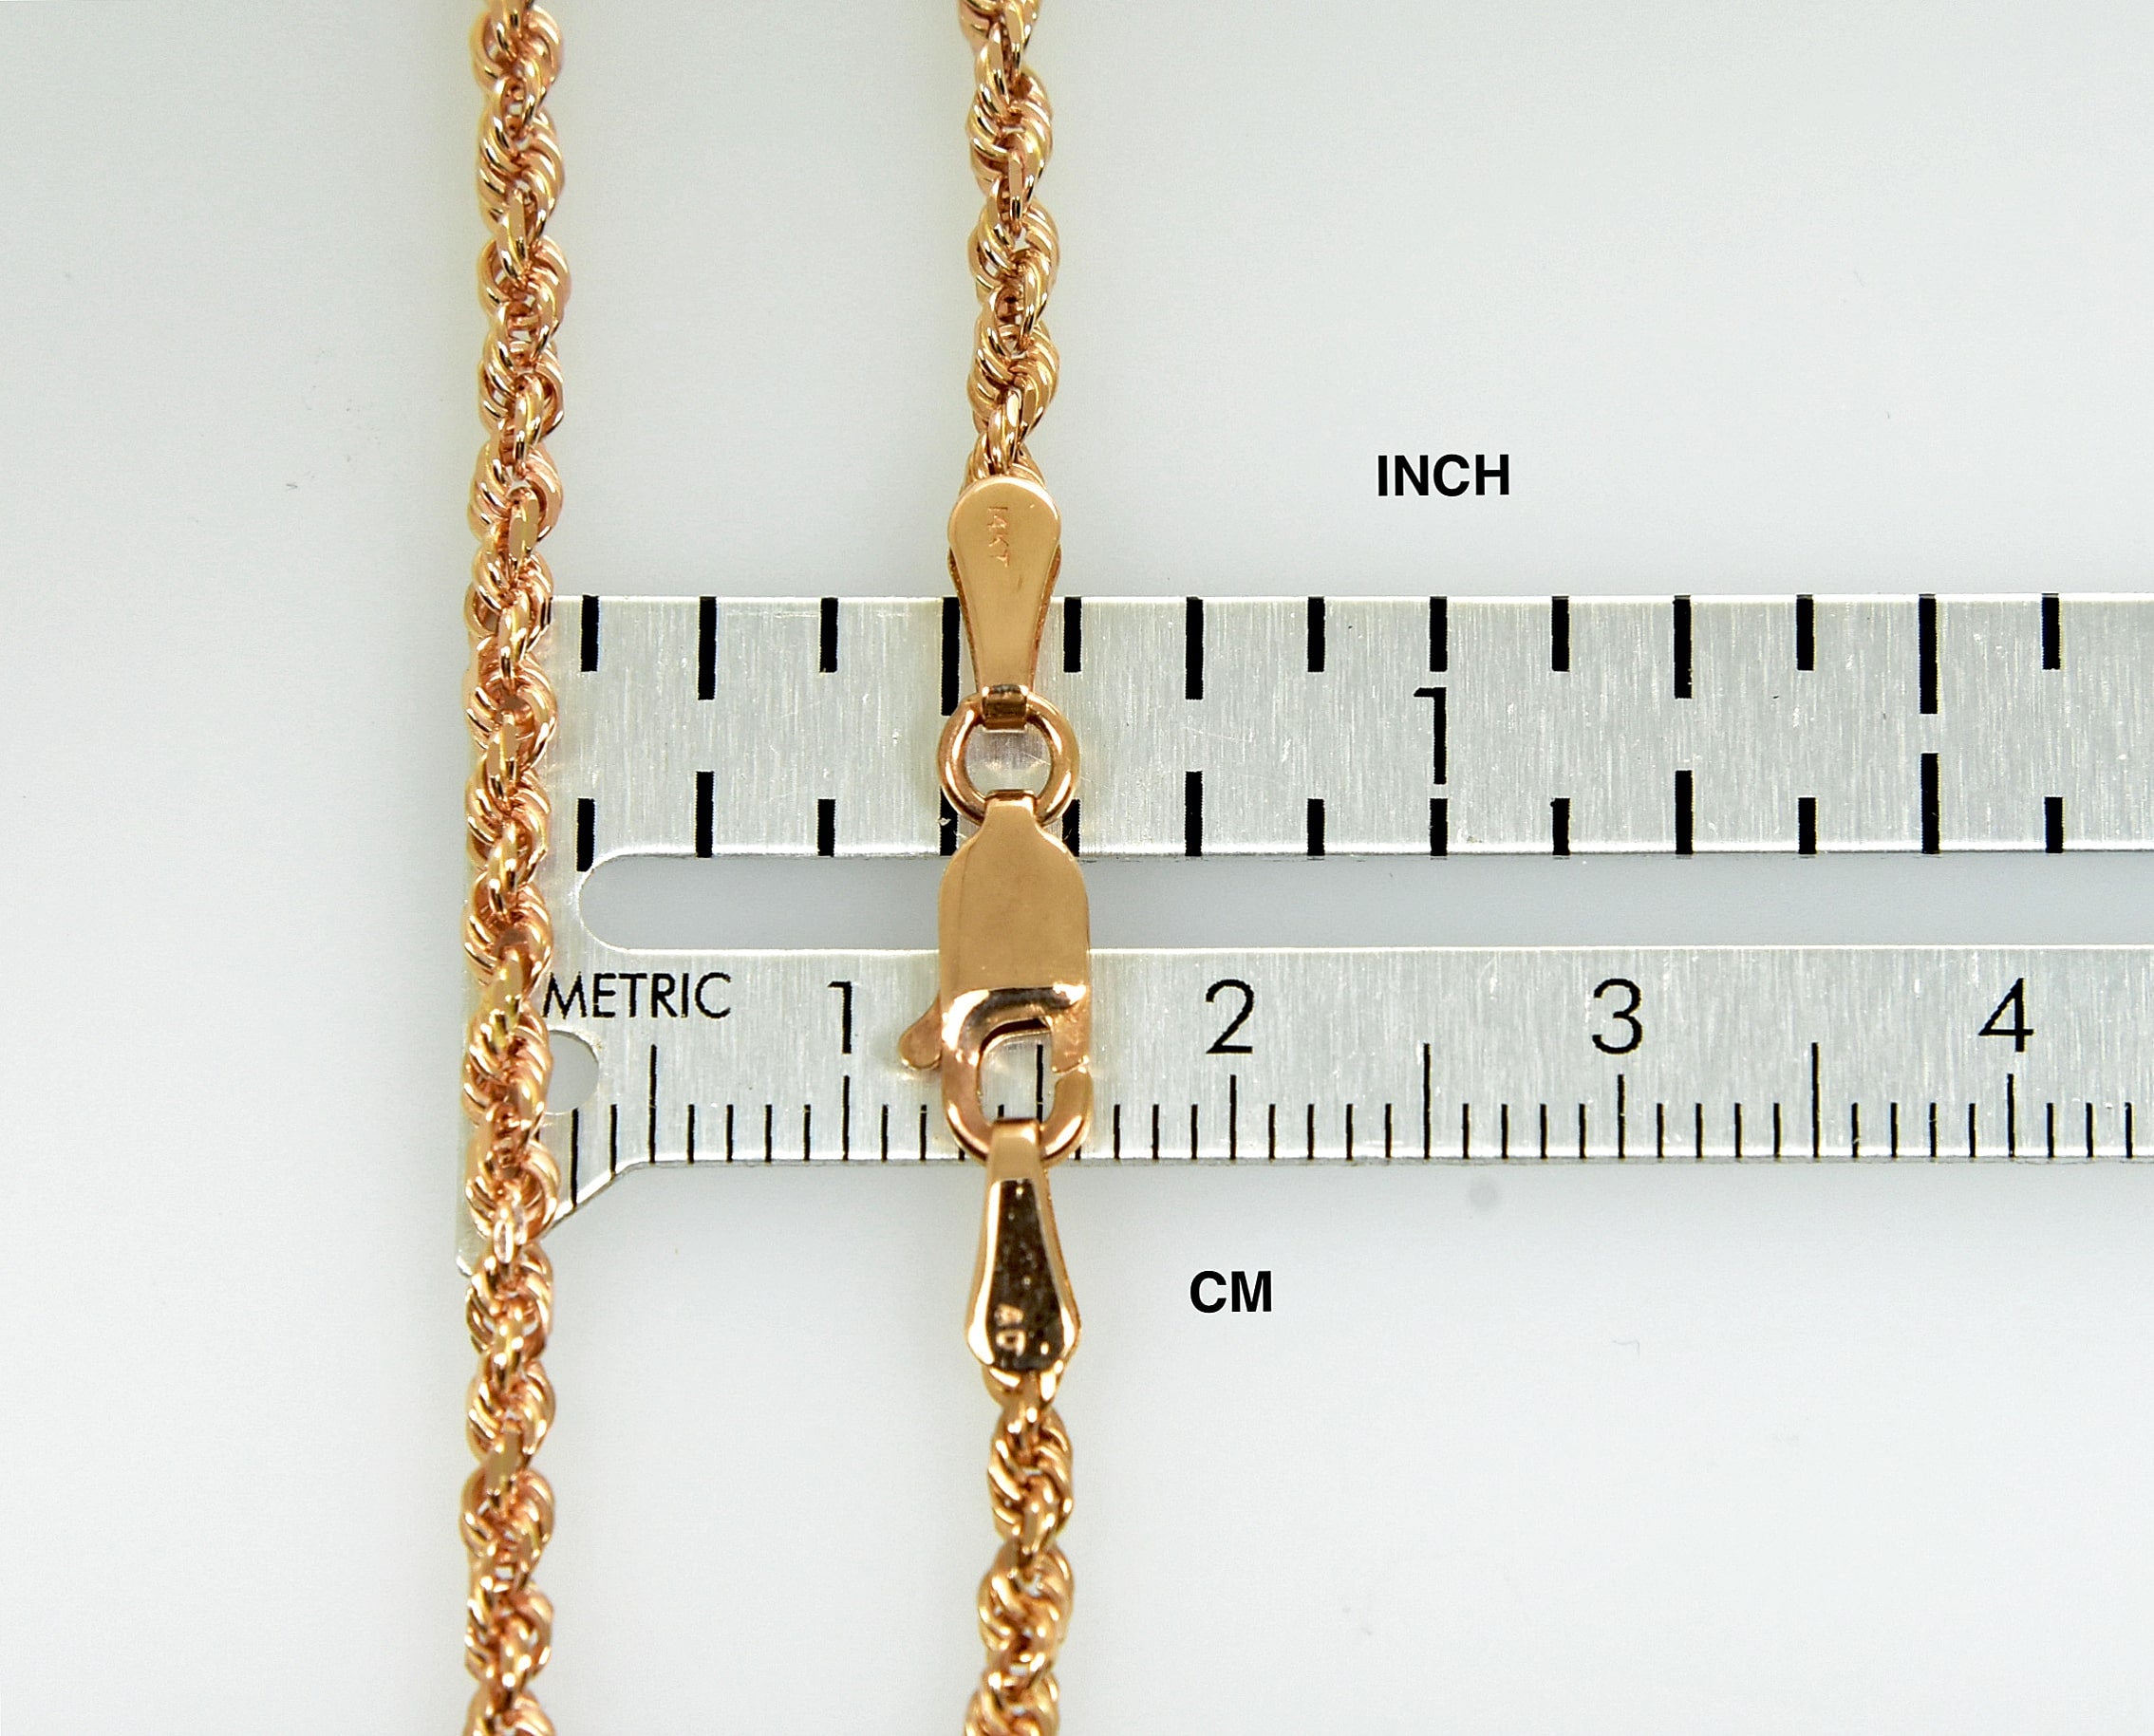 14k Rose Gold 2.5mm Diamond Cut Rope Bracelet Anklet Necklace Pendant Choker Chain